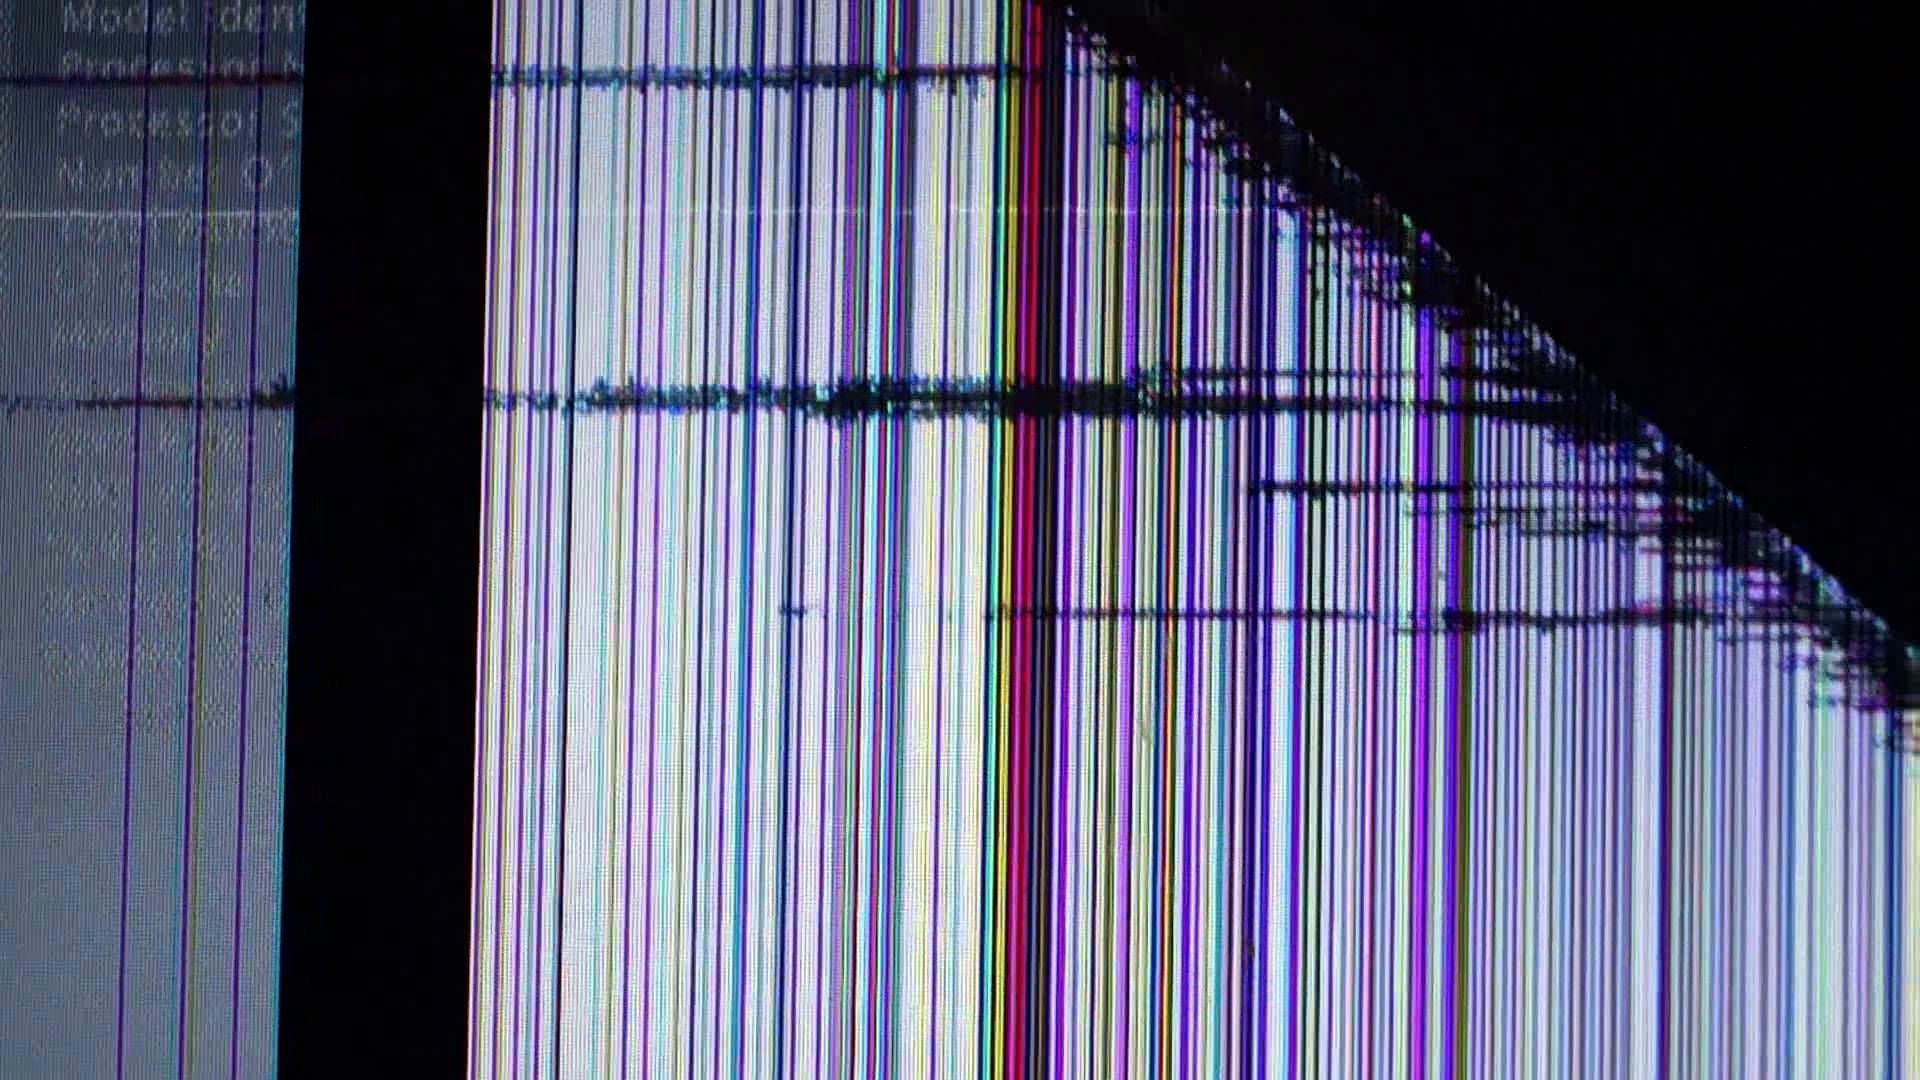 1920x1080 6 Broken Screen Wallpaper Prank For iPhone, iPod, Windows and Mac Laptop